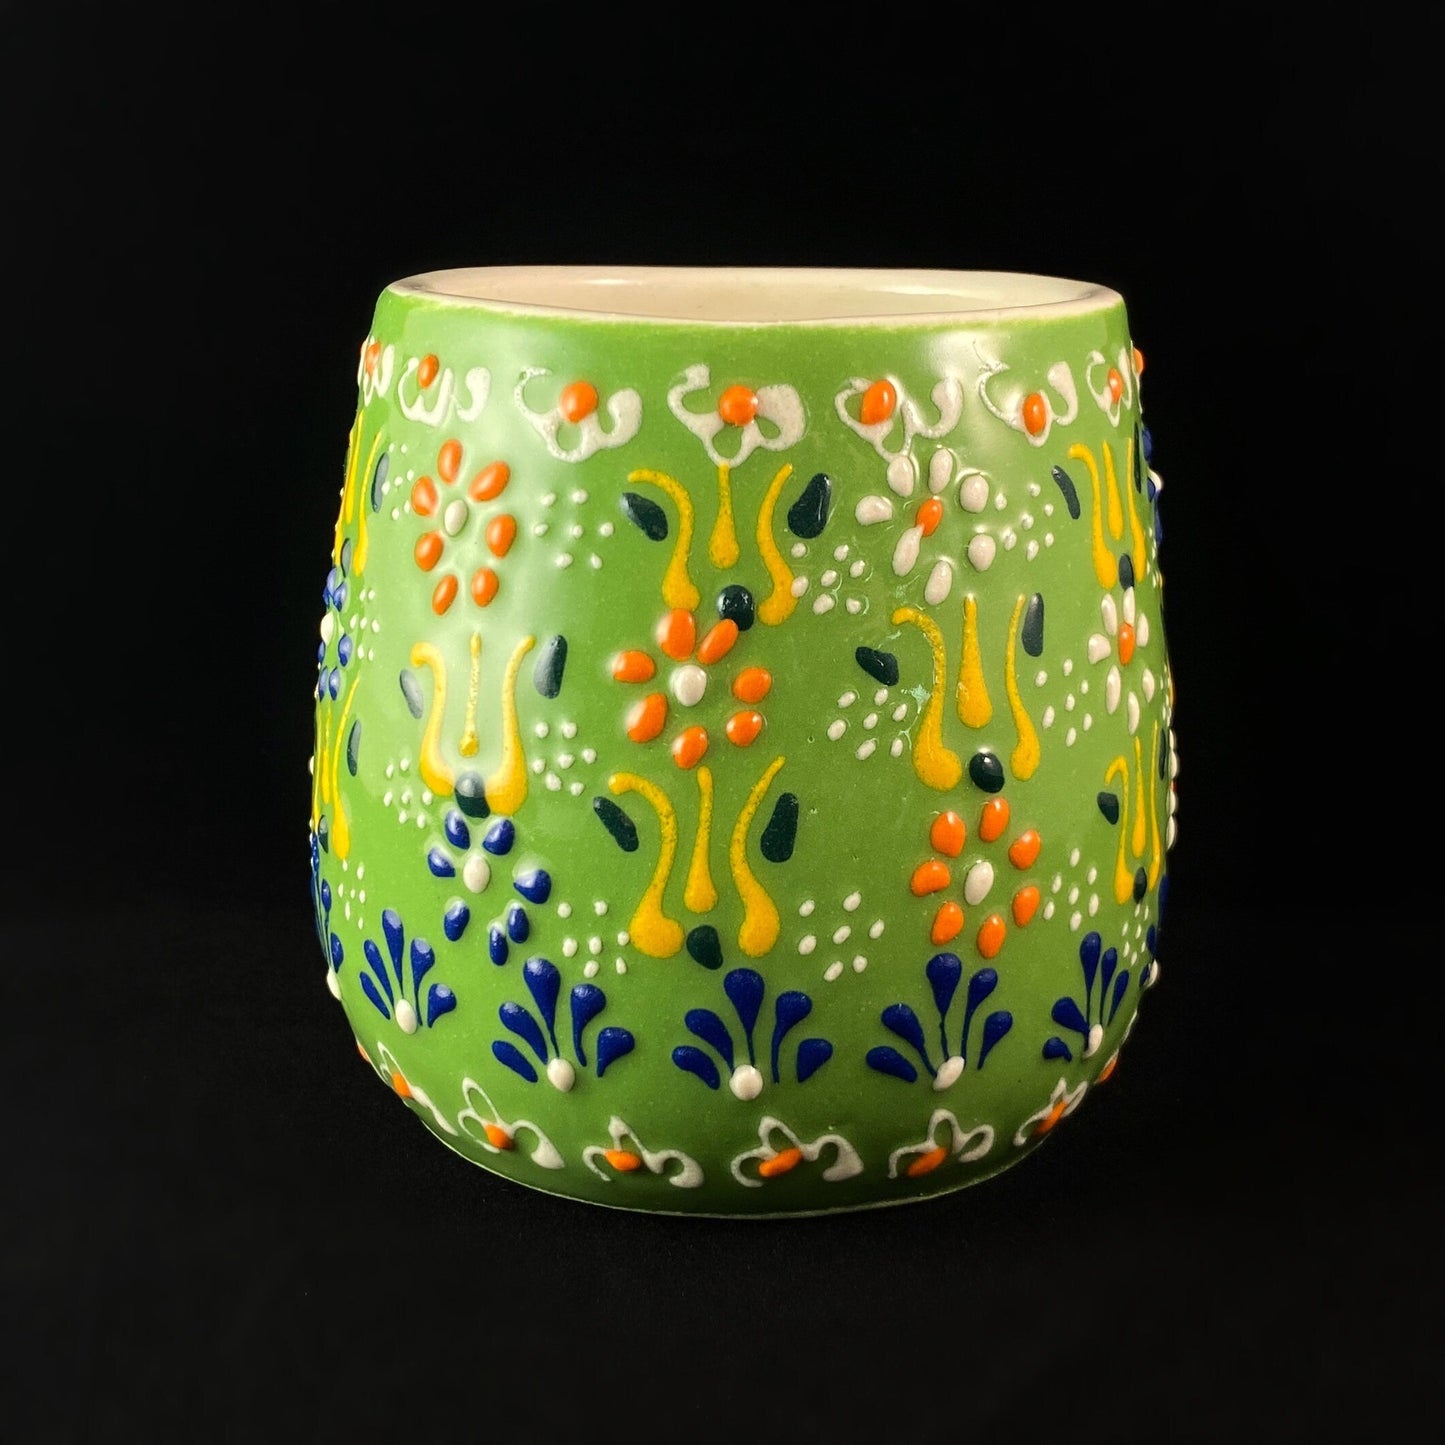 Handmade Mug, Functional and Decorative Turkish Pottery, Cottagecore Style, Green